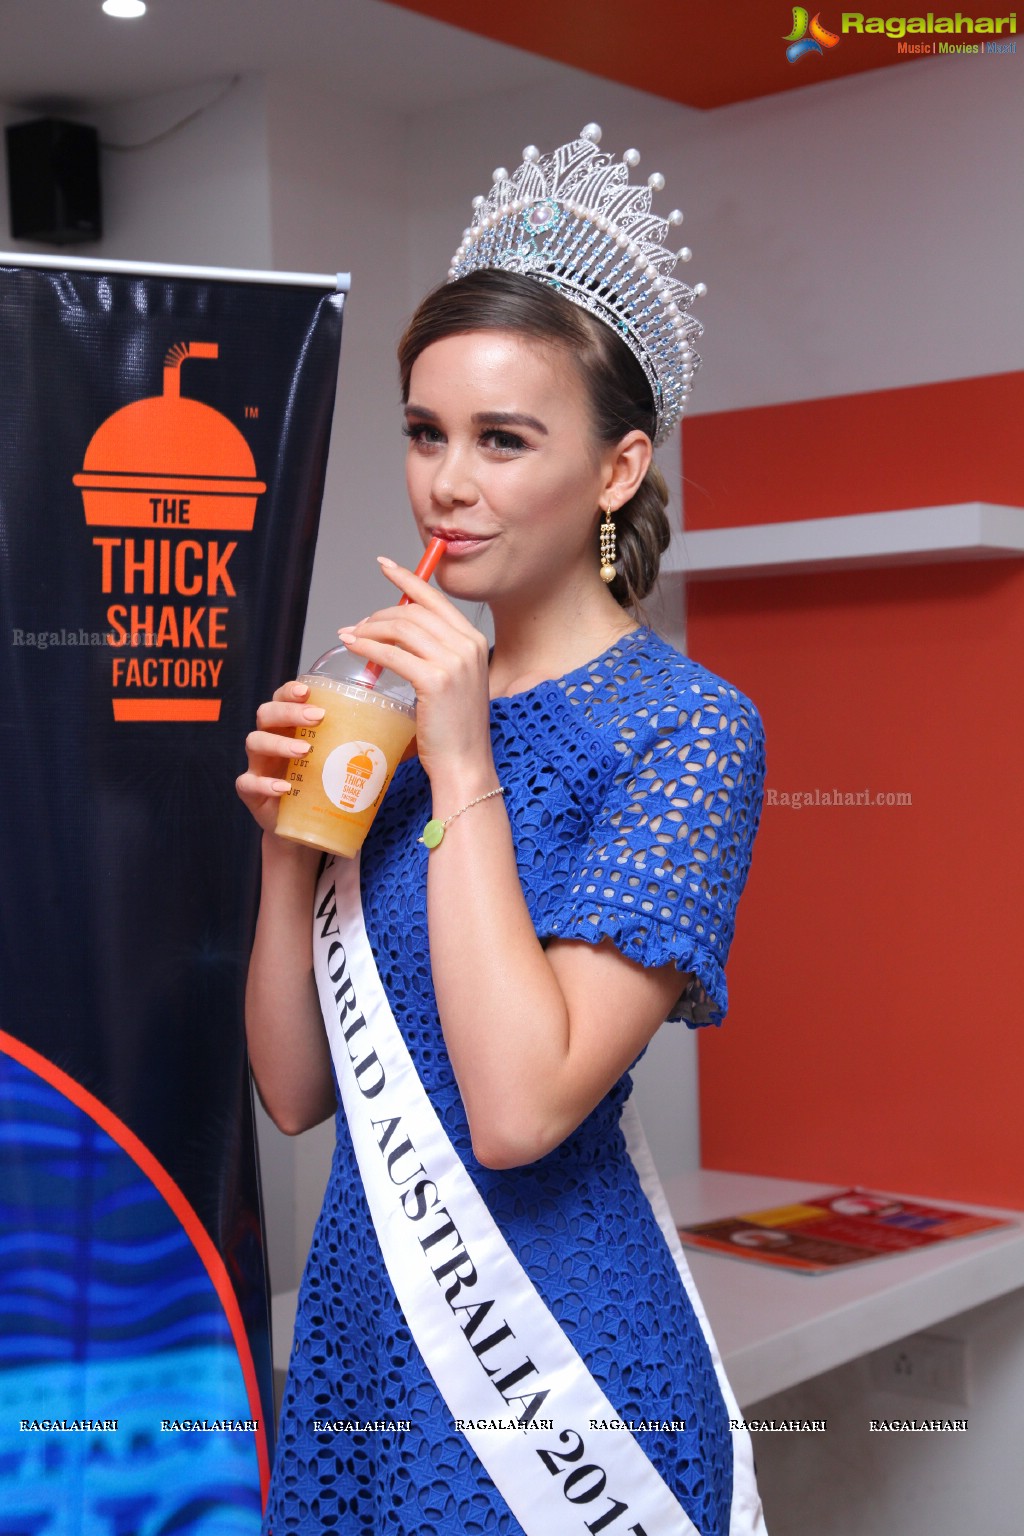 The Thickshake Factory Celebrates 4 Years With Miss Australia 2017 